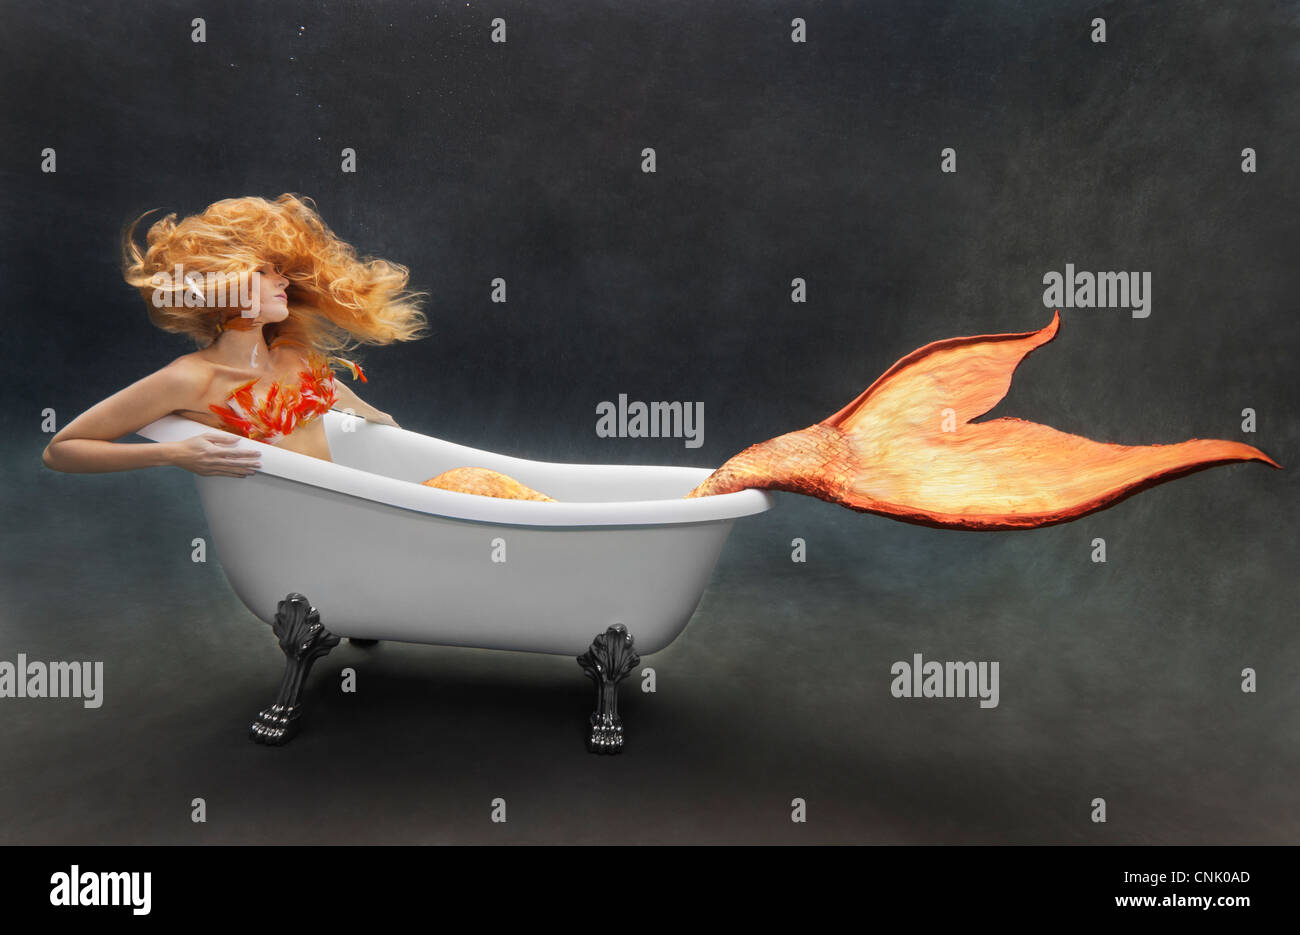 Young mermaid lounging underwater in her Victoria + Albert bathtub Stock Photo